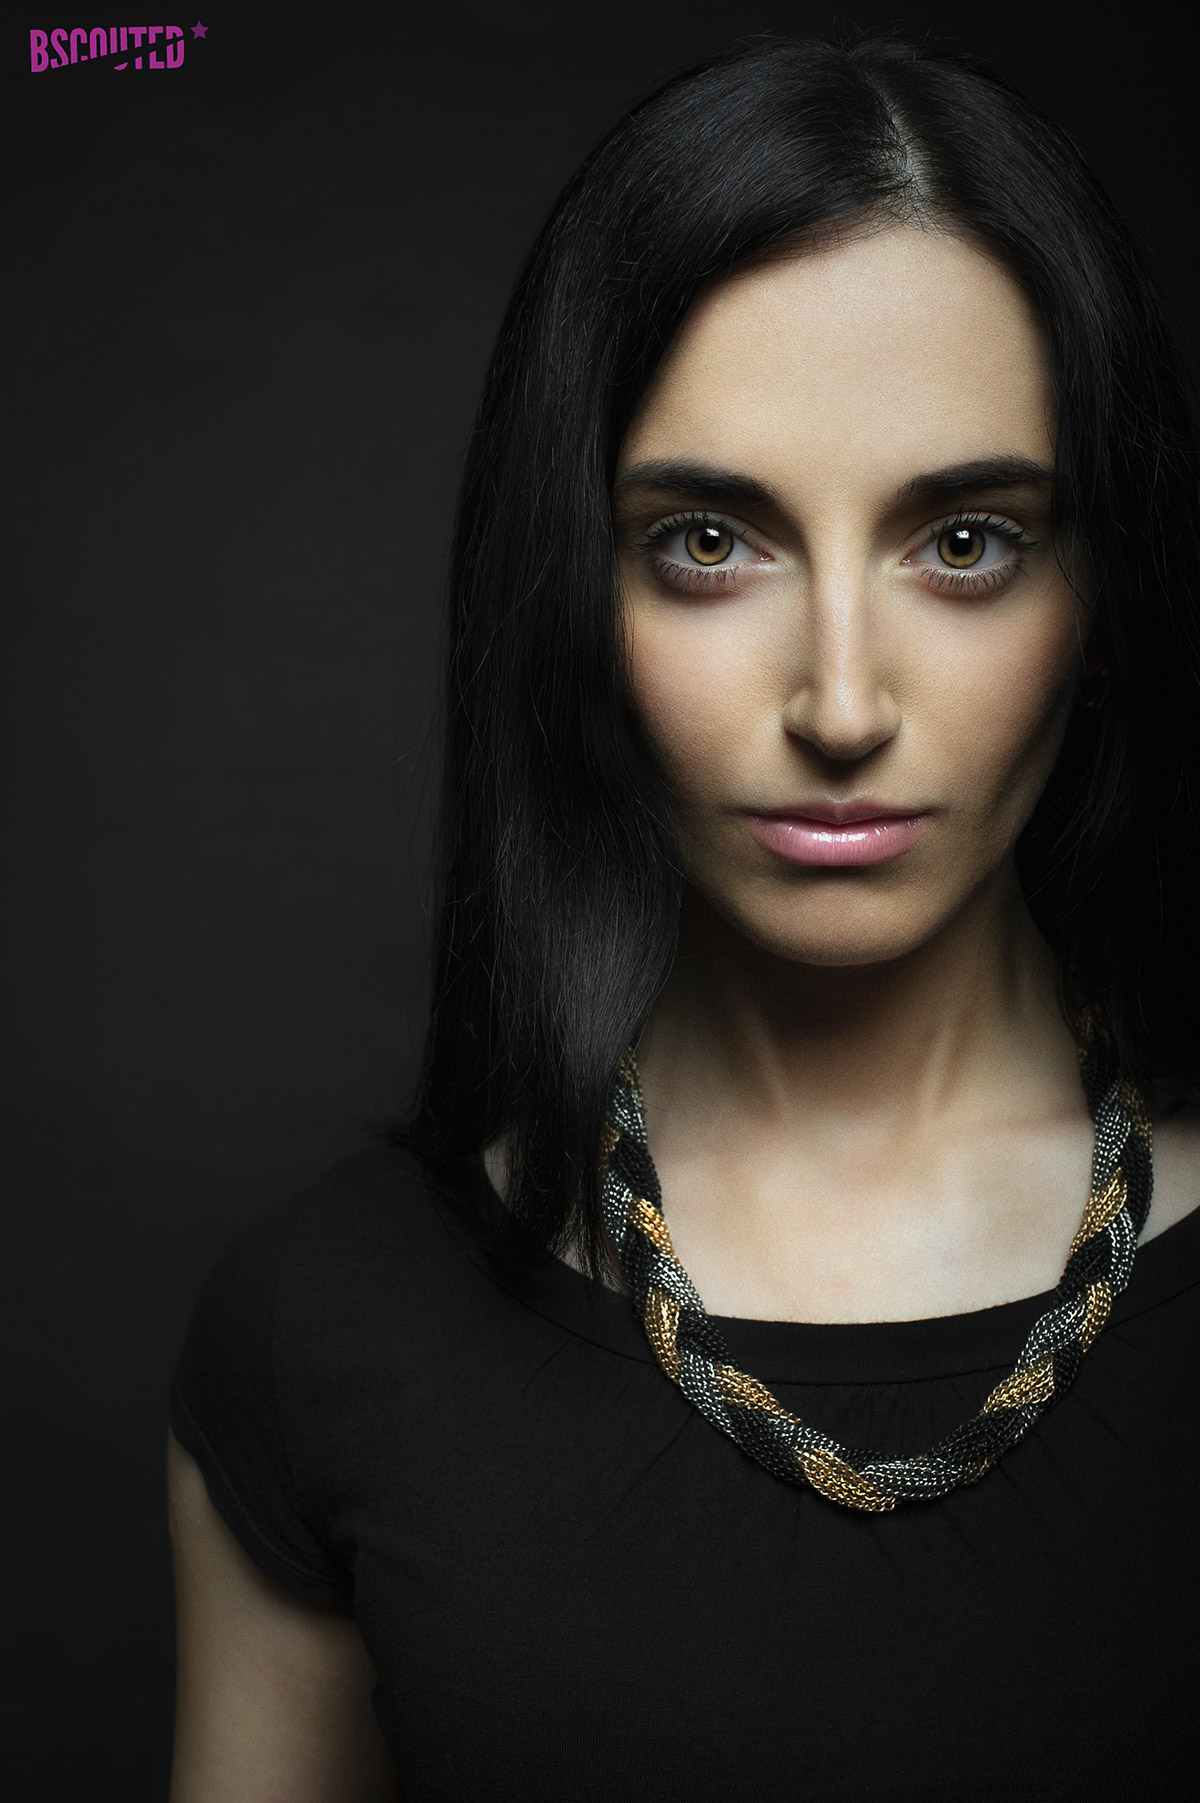 natela personal photoshoot studio dark hair Armenian beuty